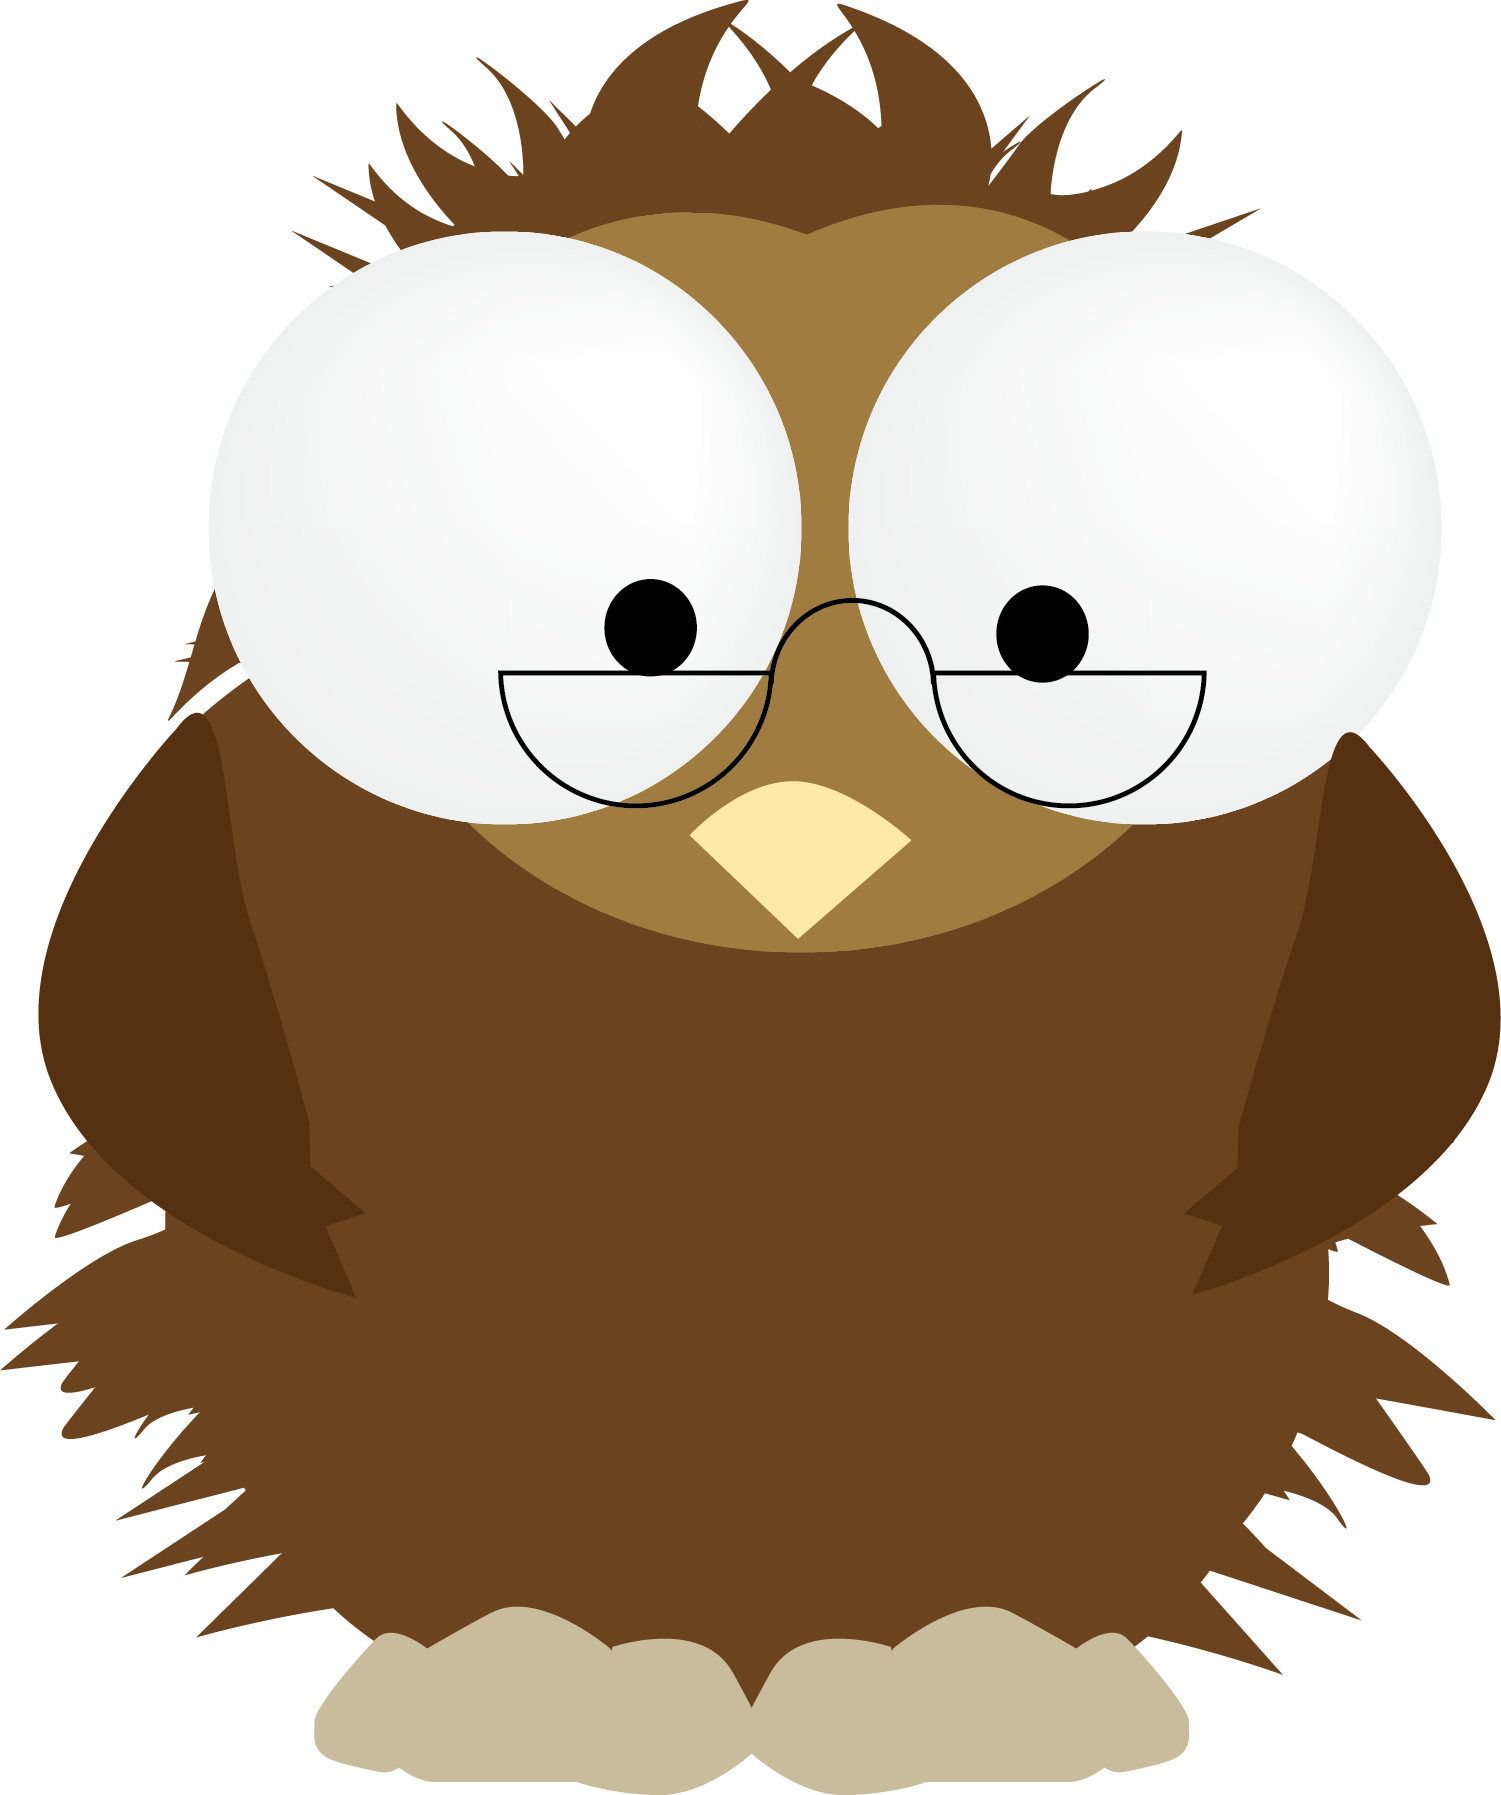 Graduation clipart owl, Graduation owl Transparent FREE for download on ...